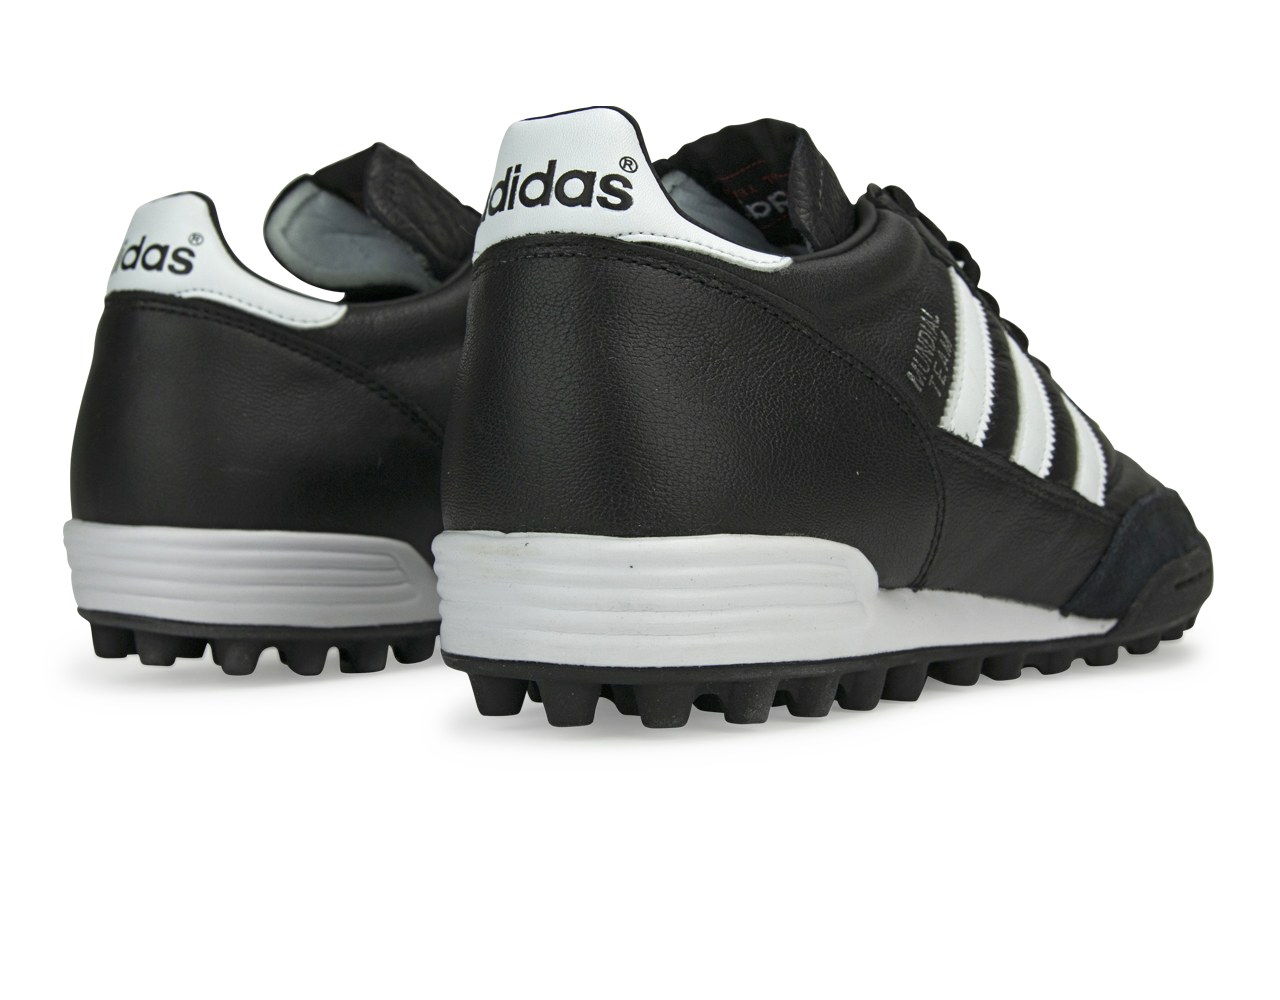 adidas Men's Mundial Team Turf Soccer Shoes Black/Running White